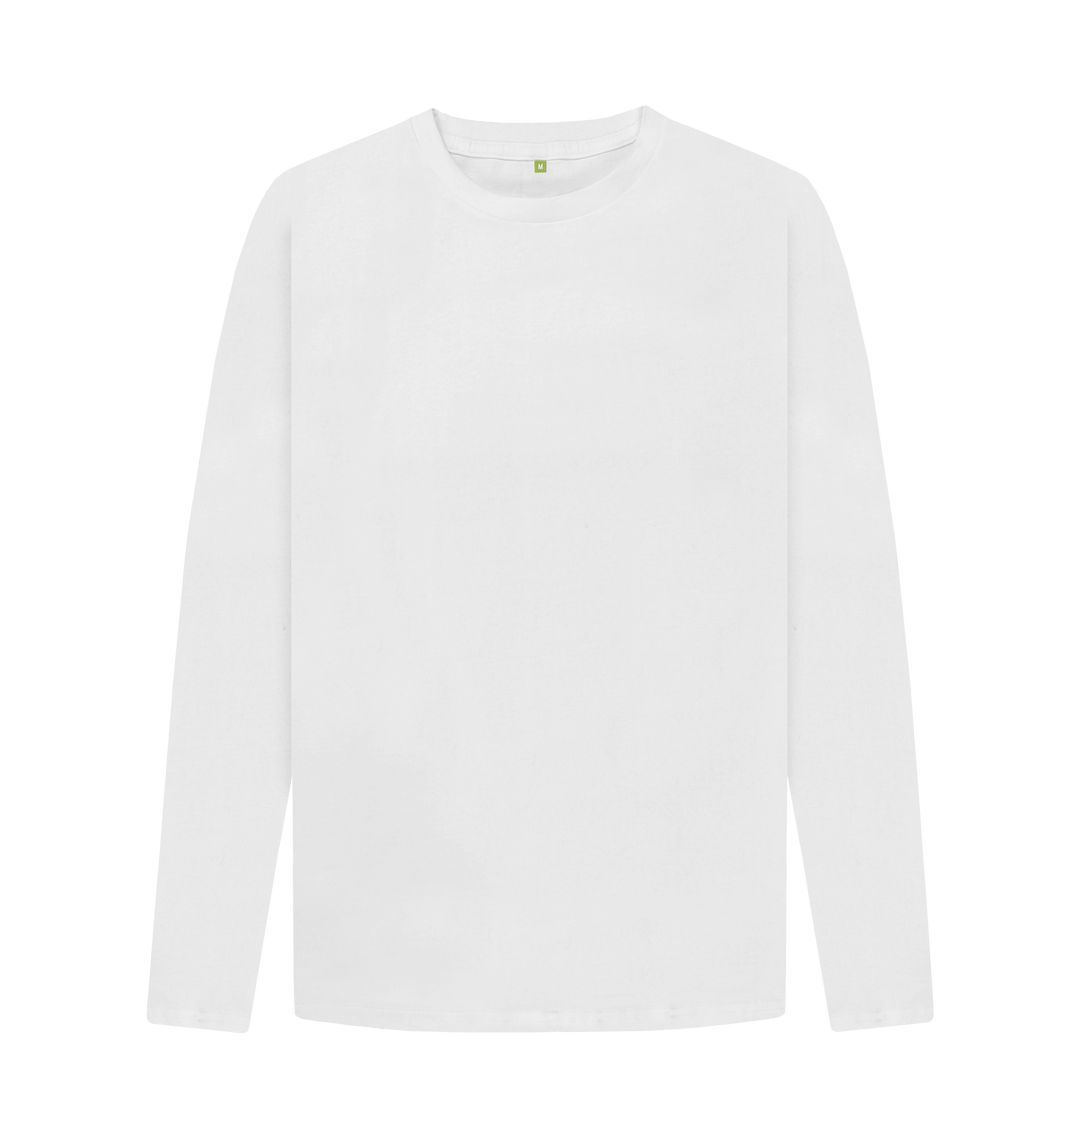 White Men's organic cotton long sleeve t-shirt